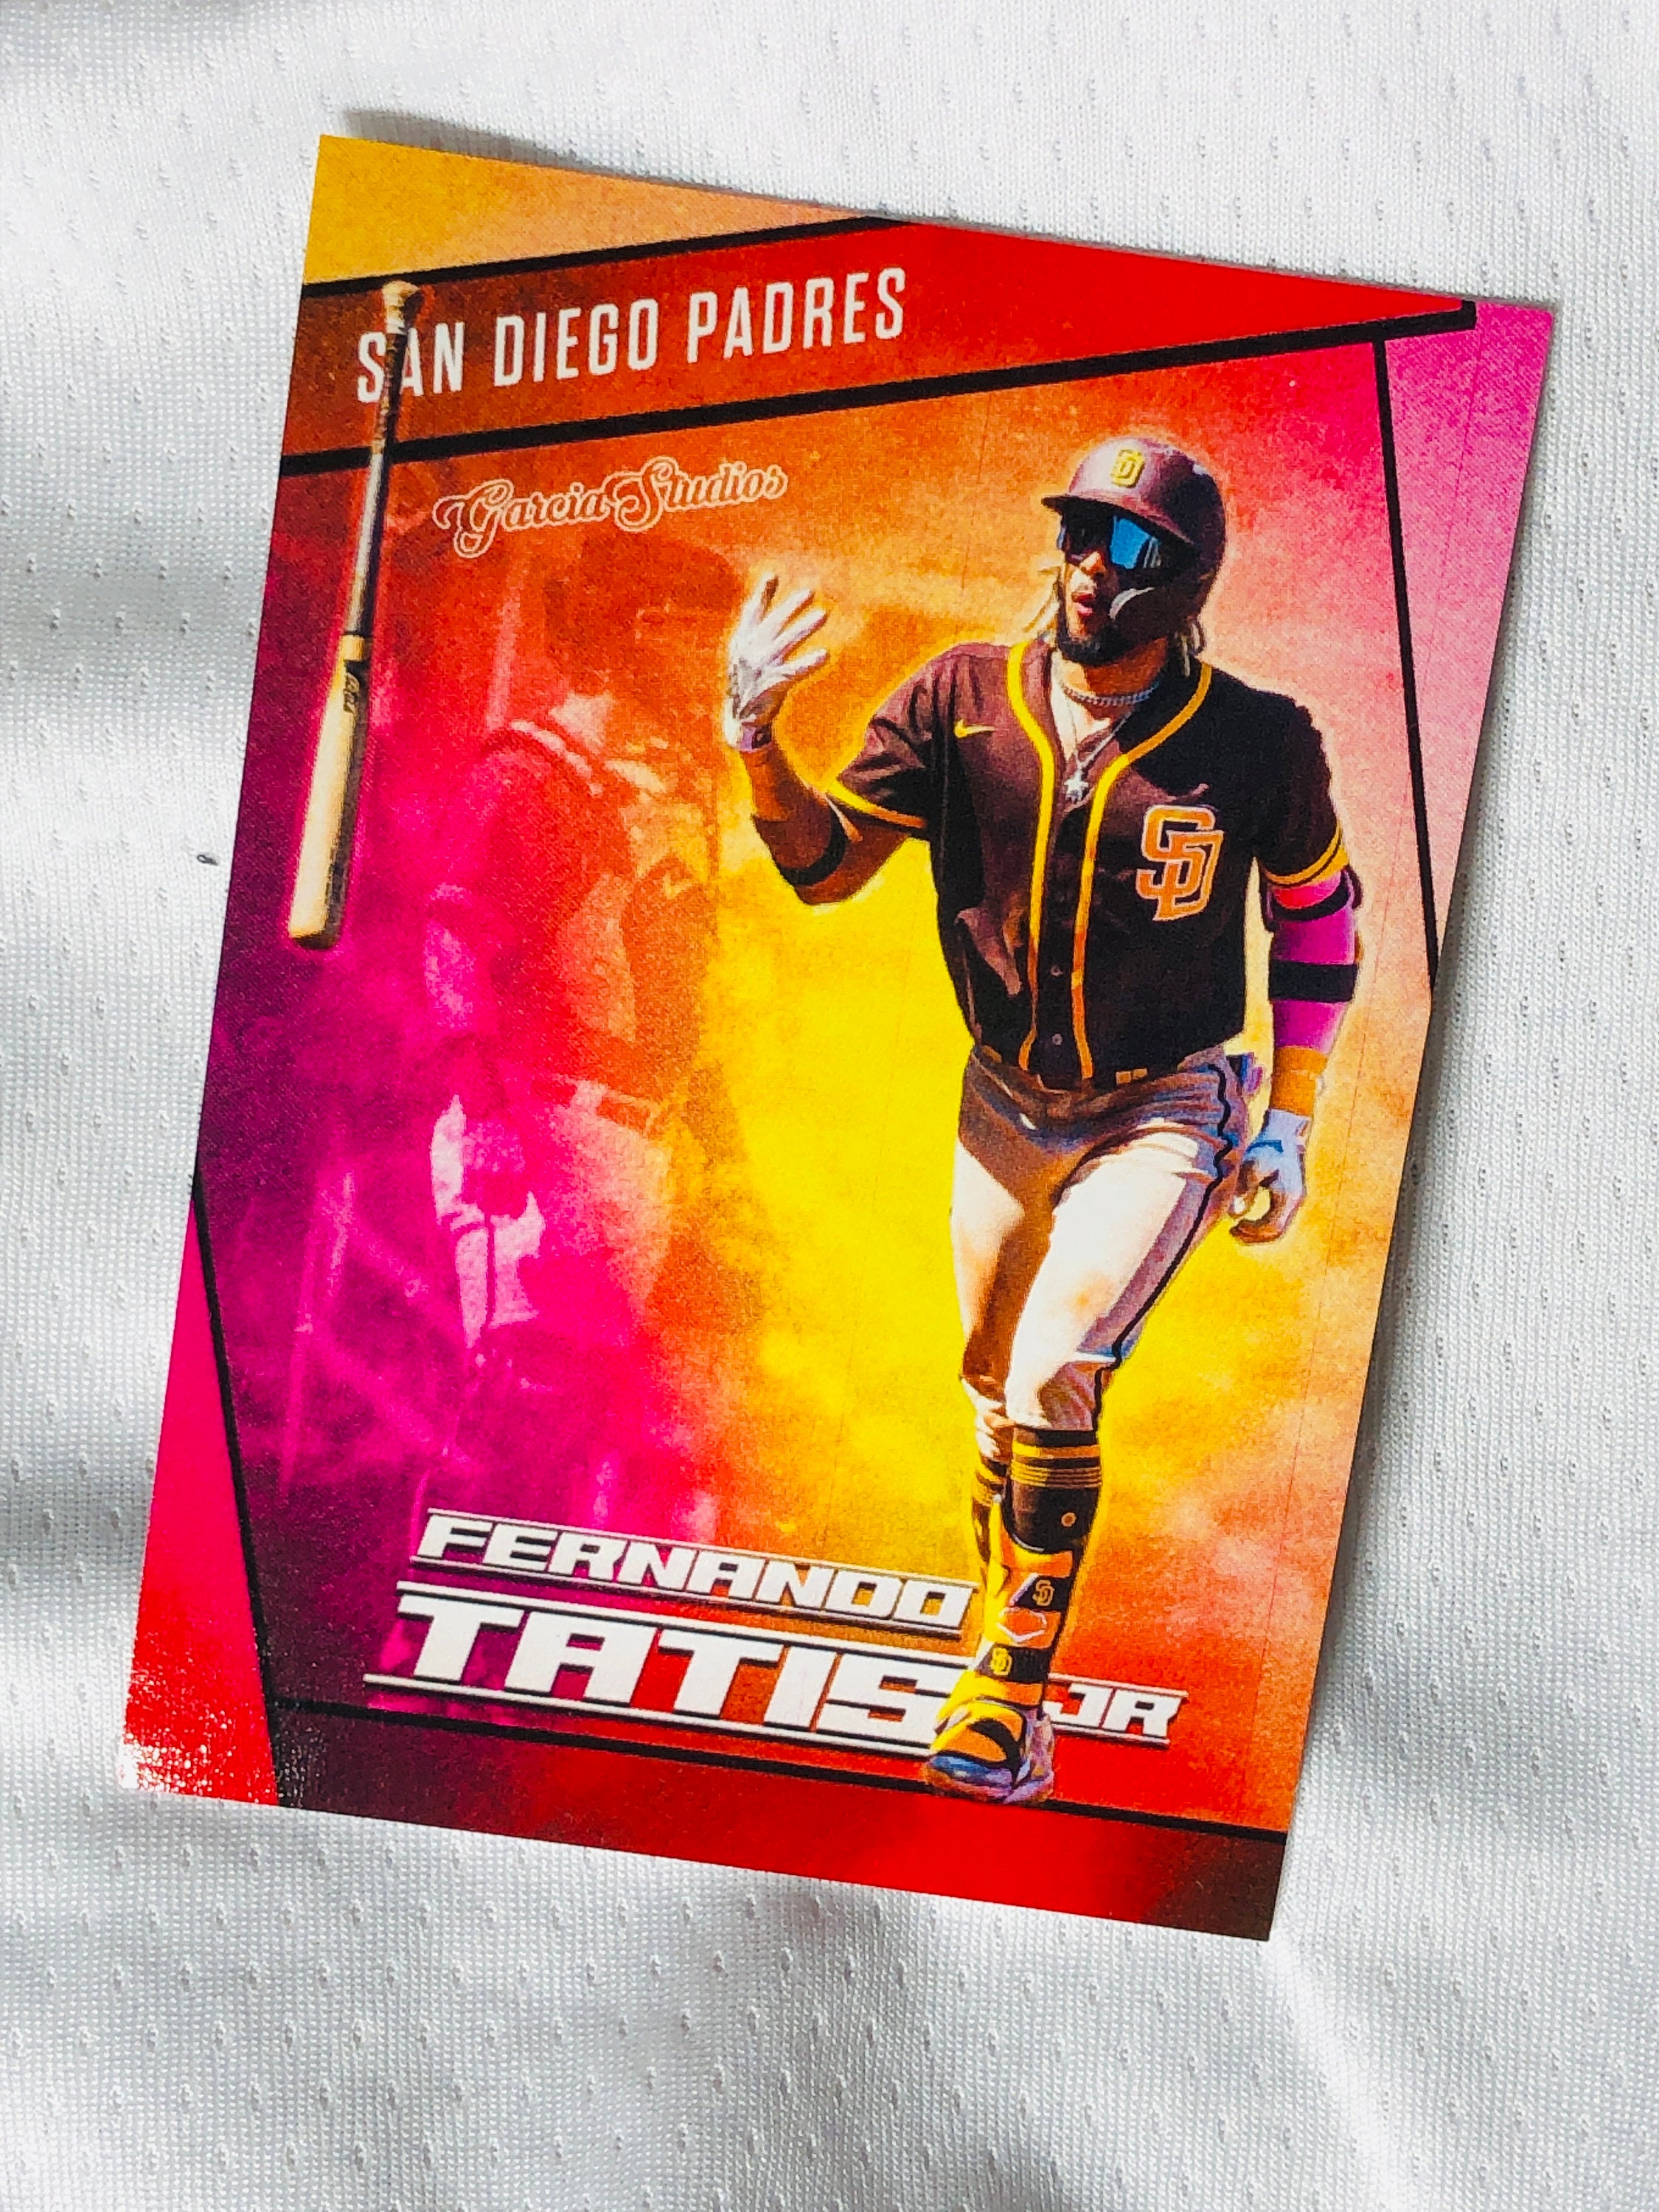 San Diego Padres Lithograph print of Fernando Tatis Jr "Bat Flip  "